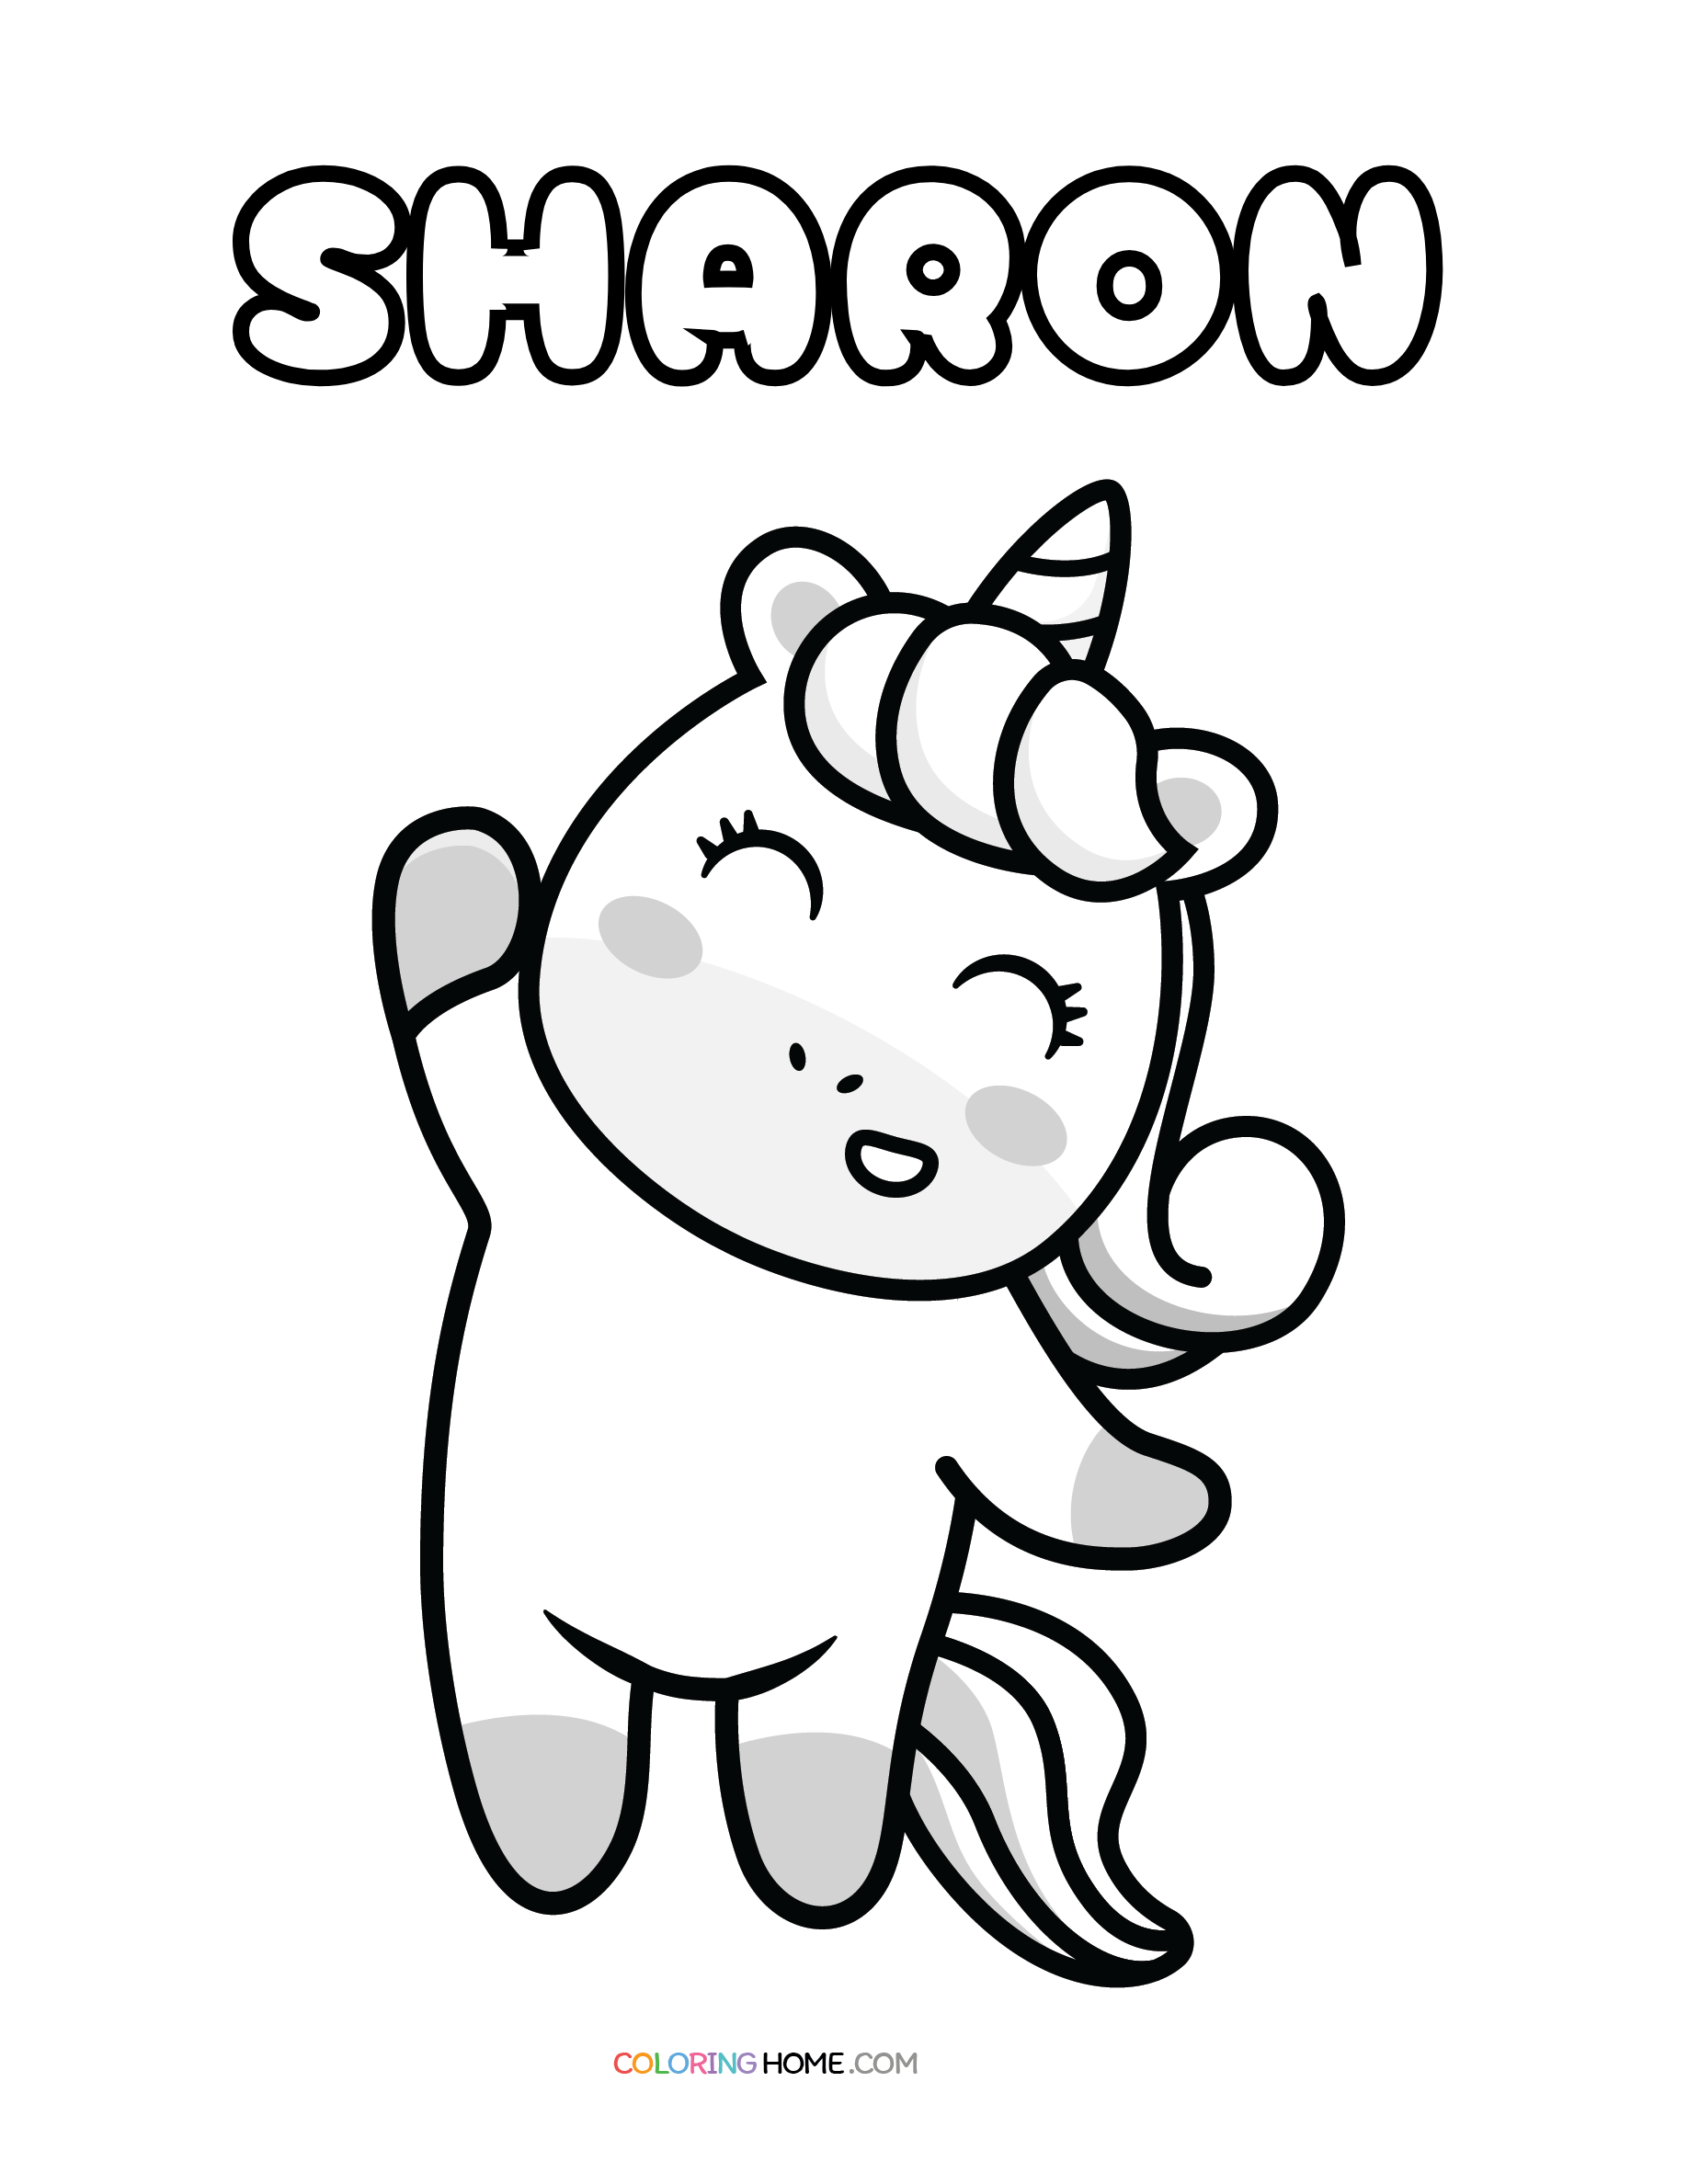 Sharon unicorn coloring page